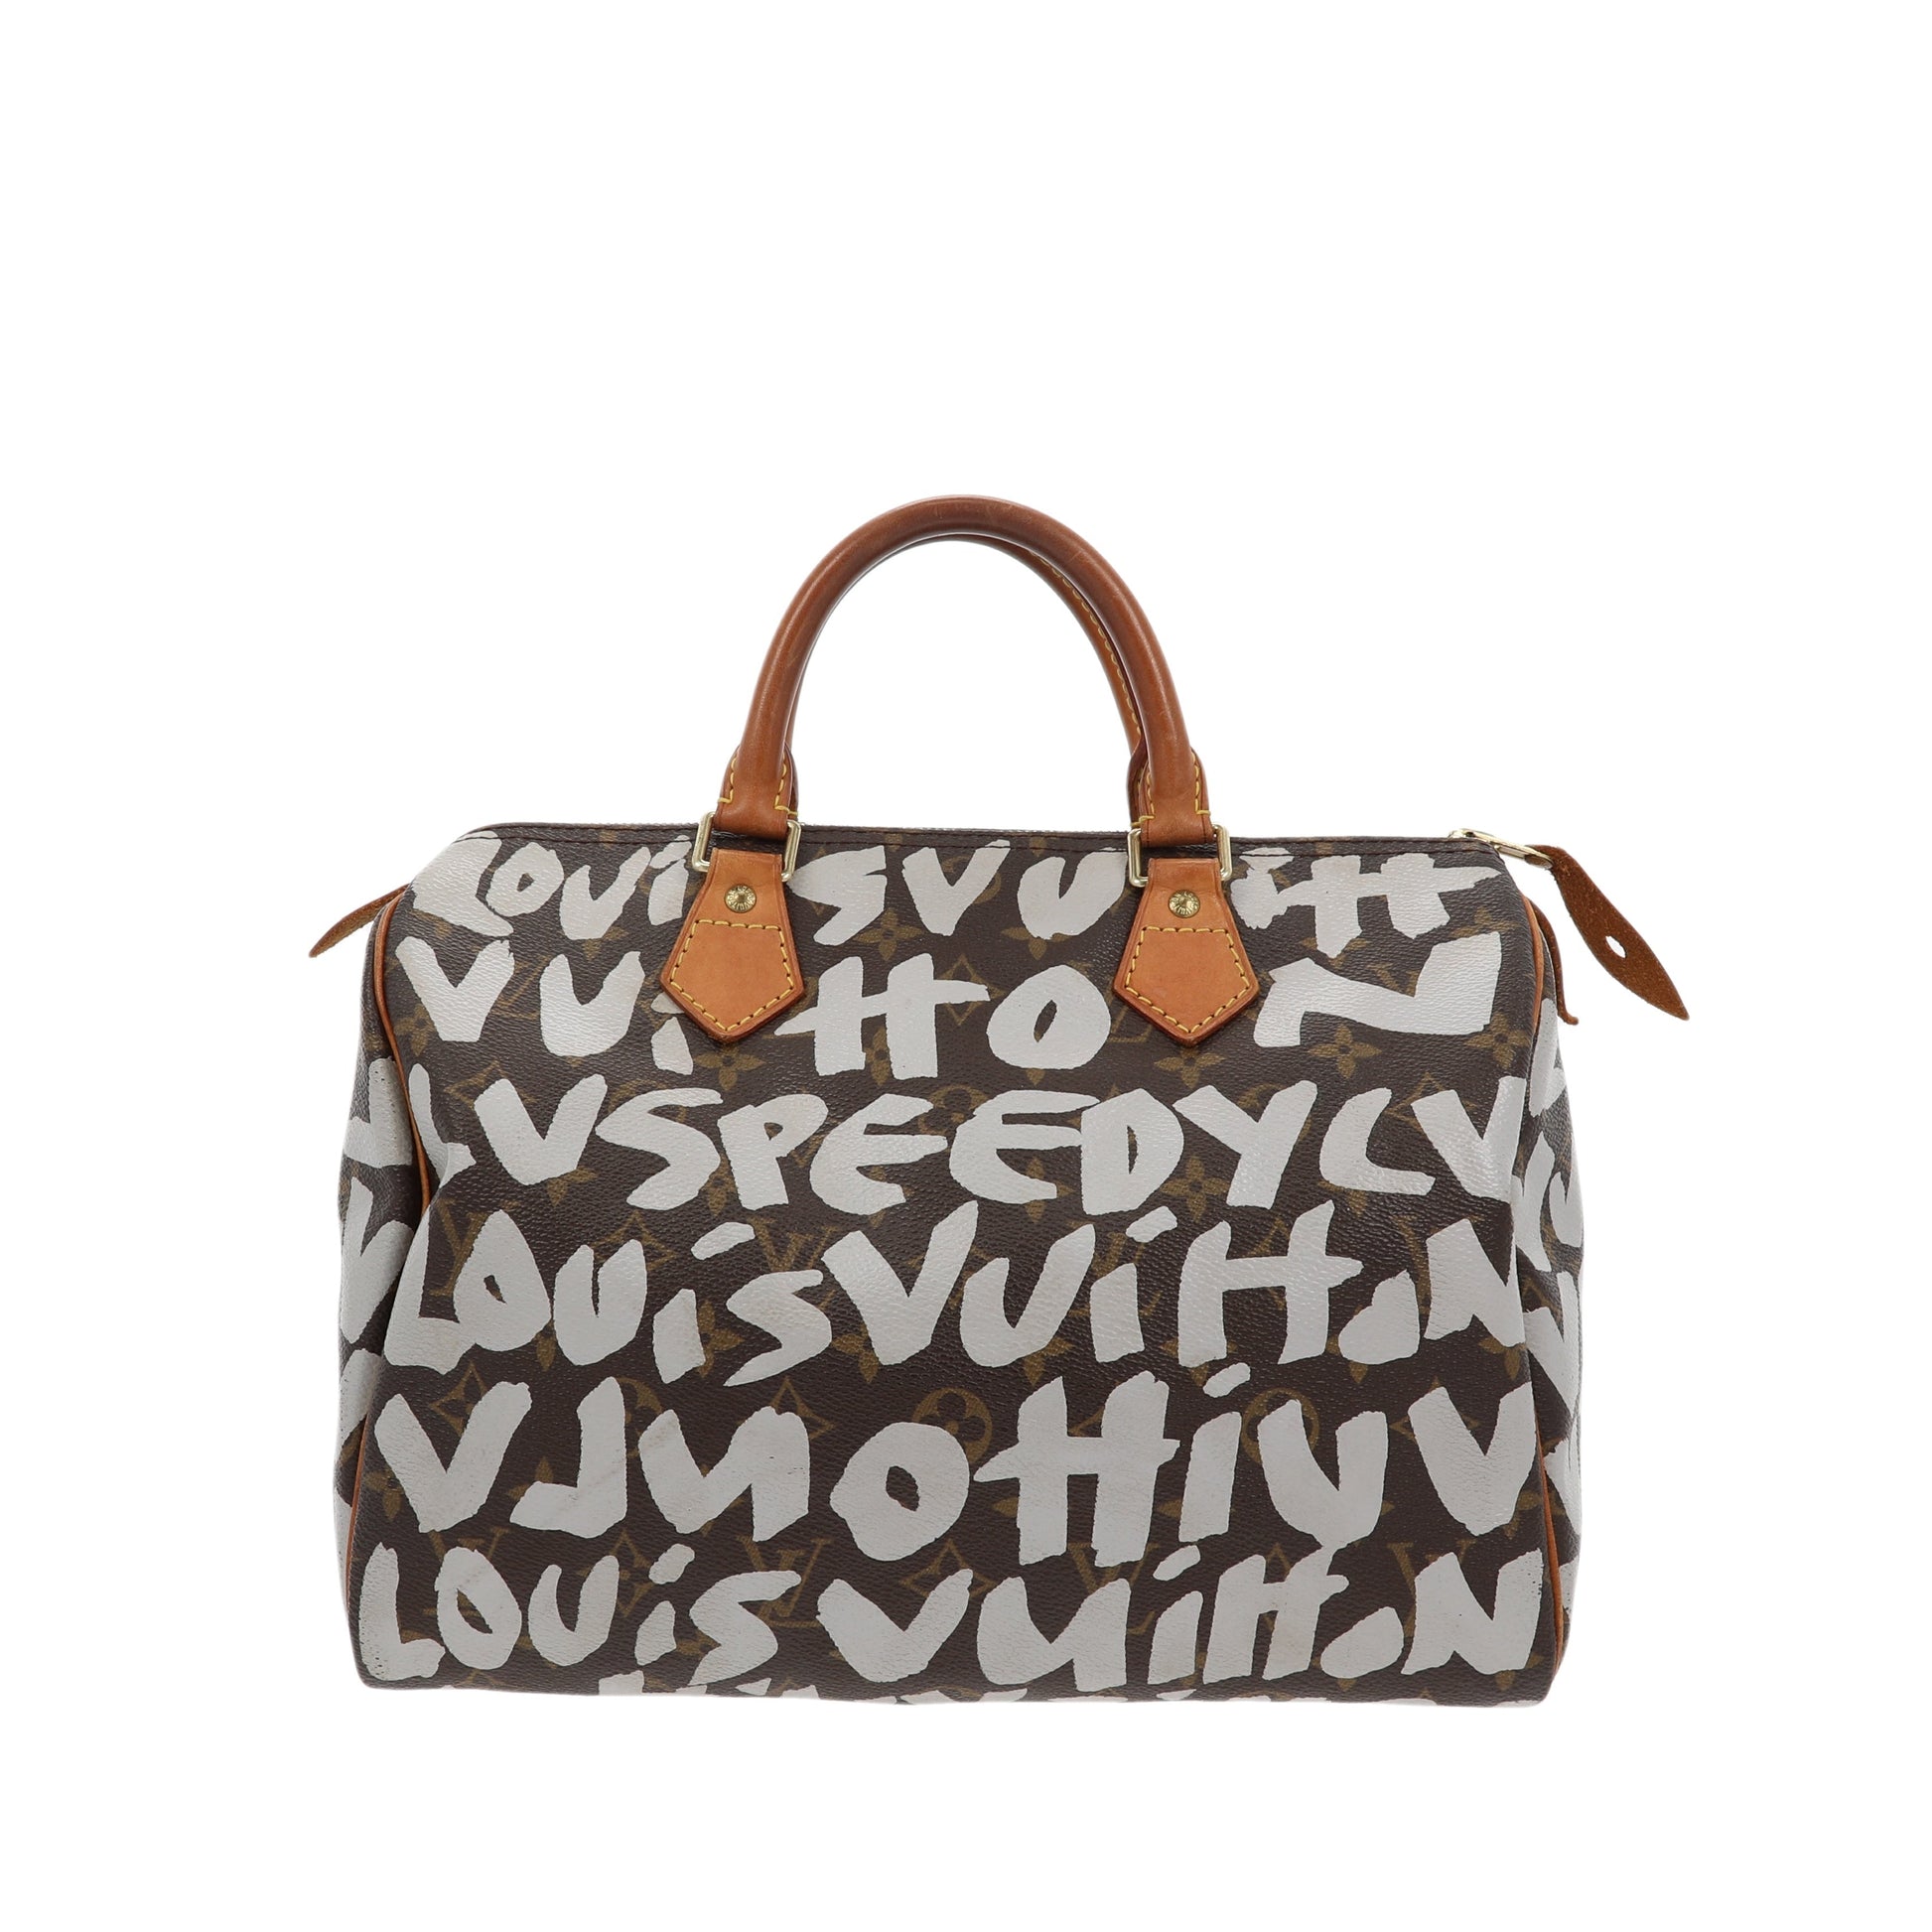 Louis Vuitton Stephen Sprouse Graffiti Limited Edition Speedy 30 Bag